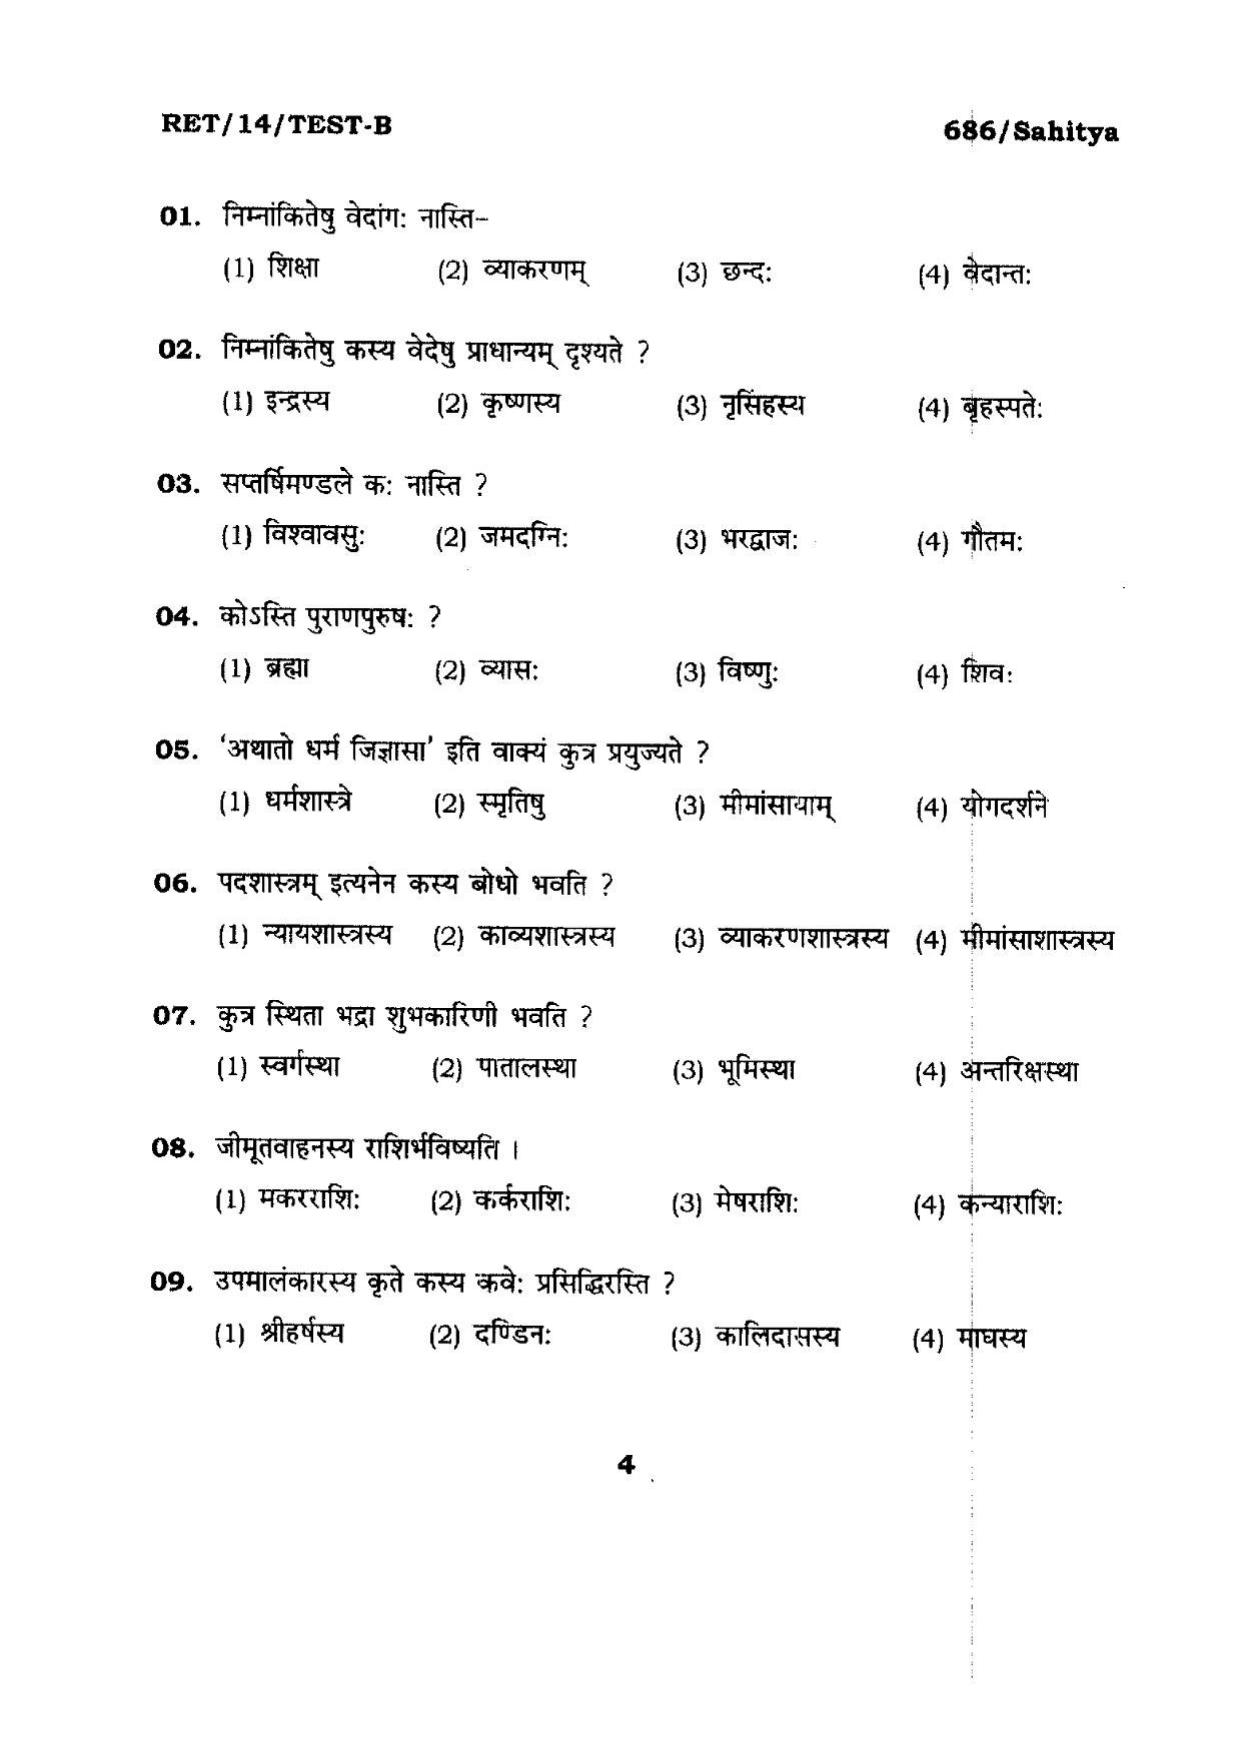 BHU RET Sahitya 2014 Question Paper - Page 4